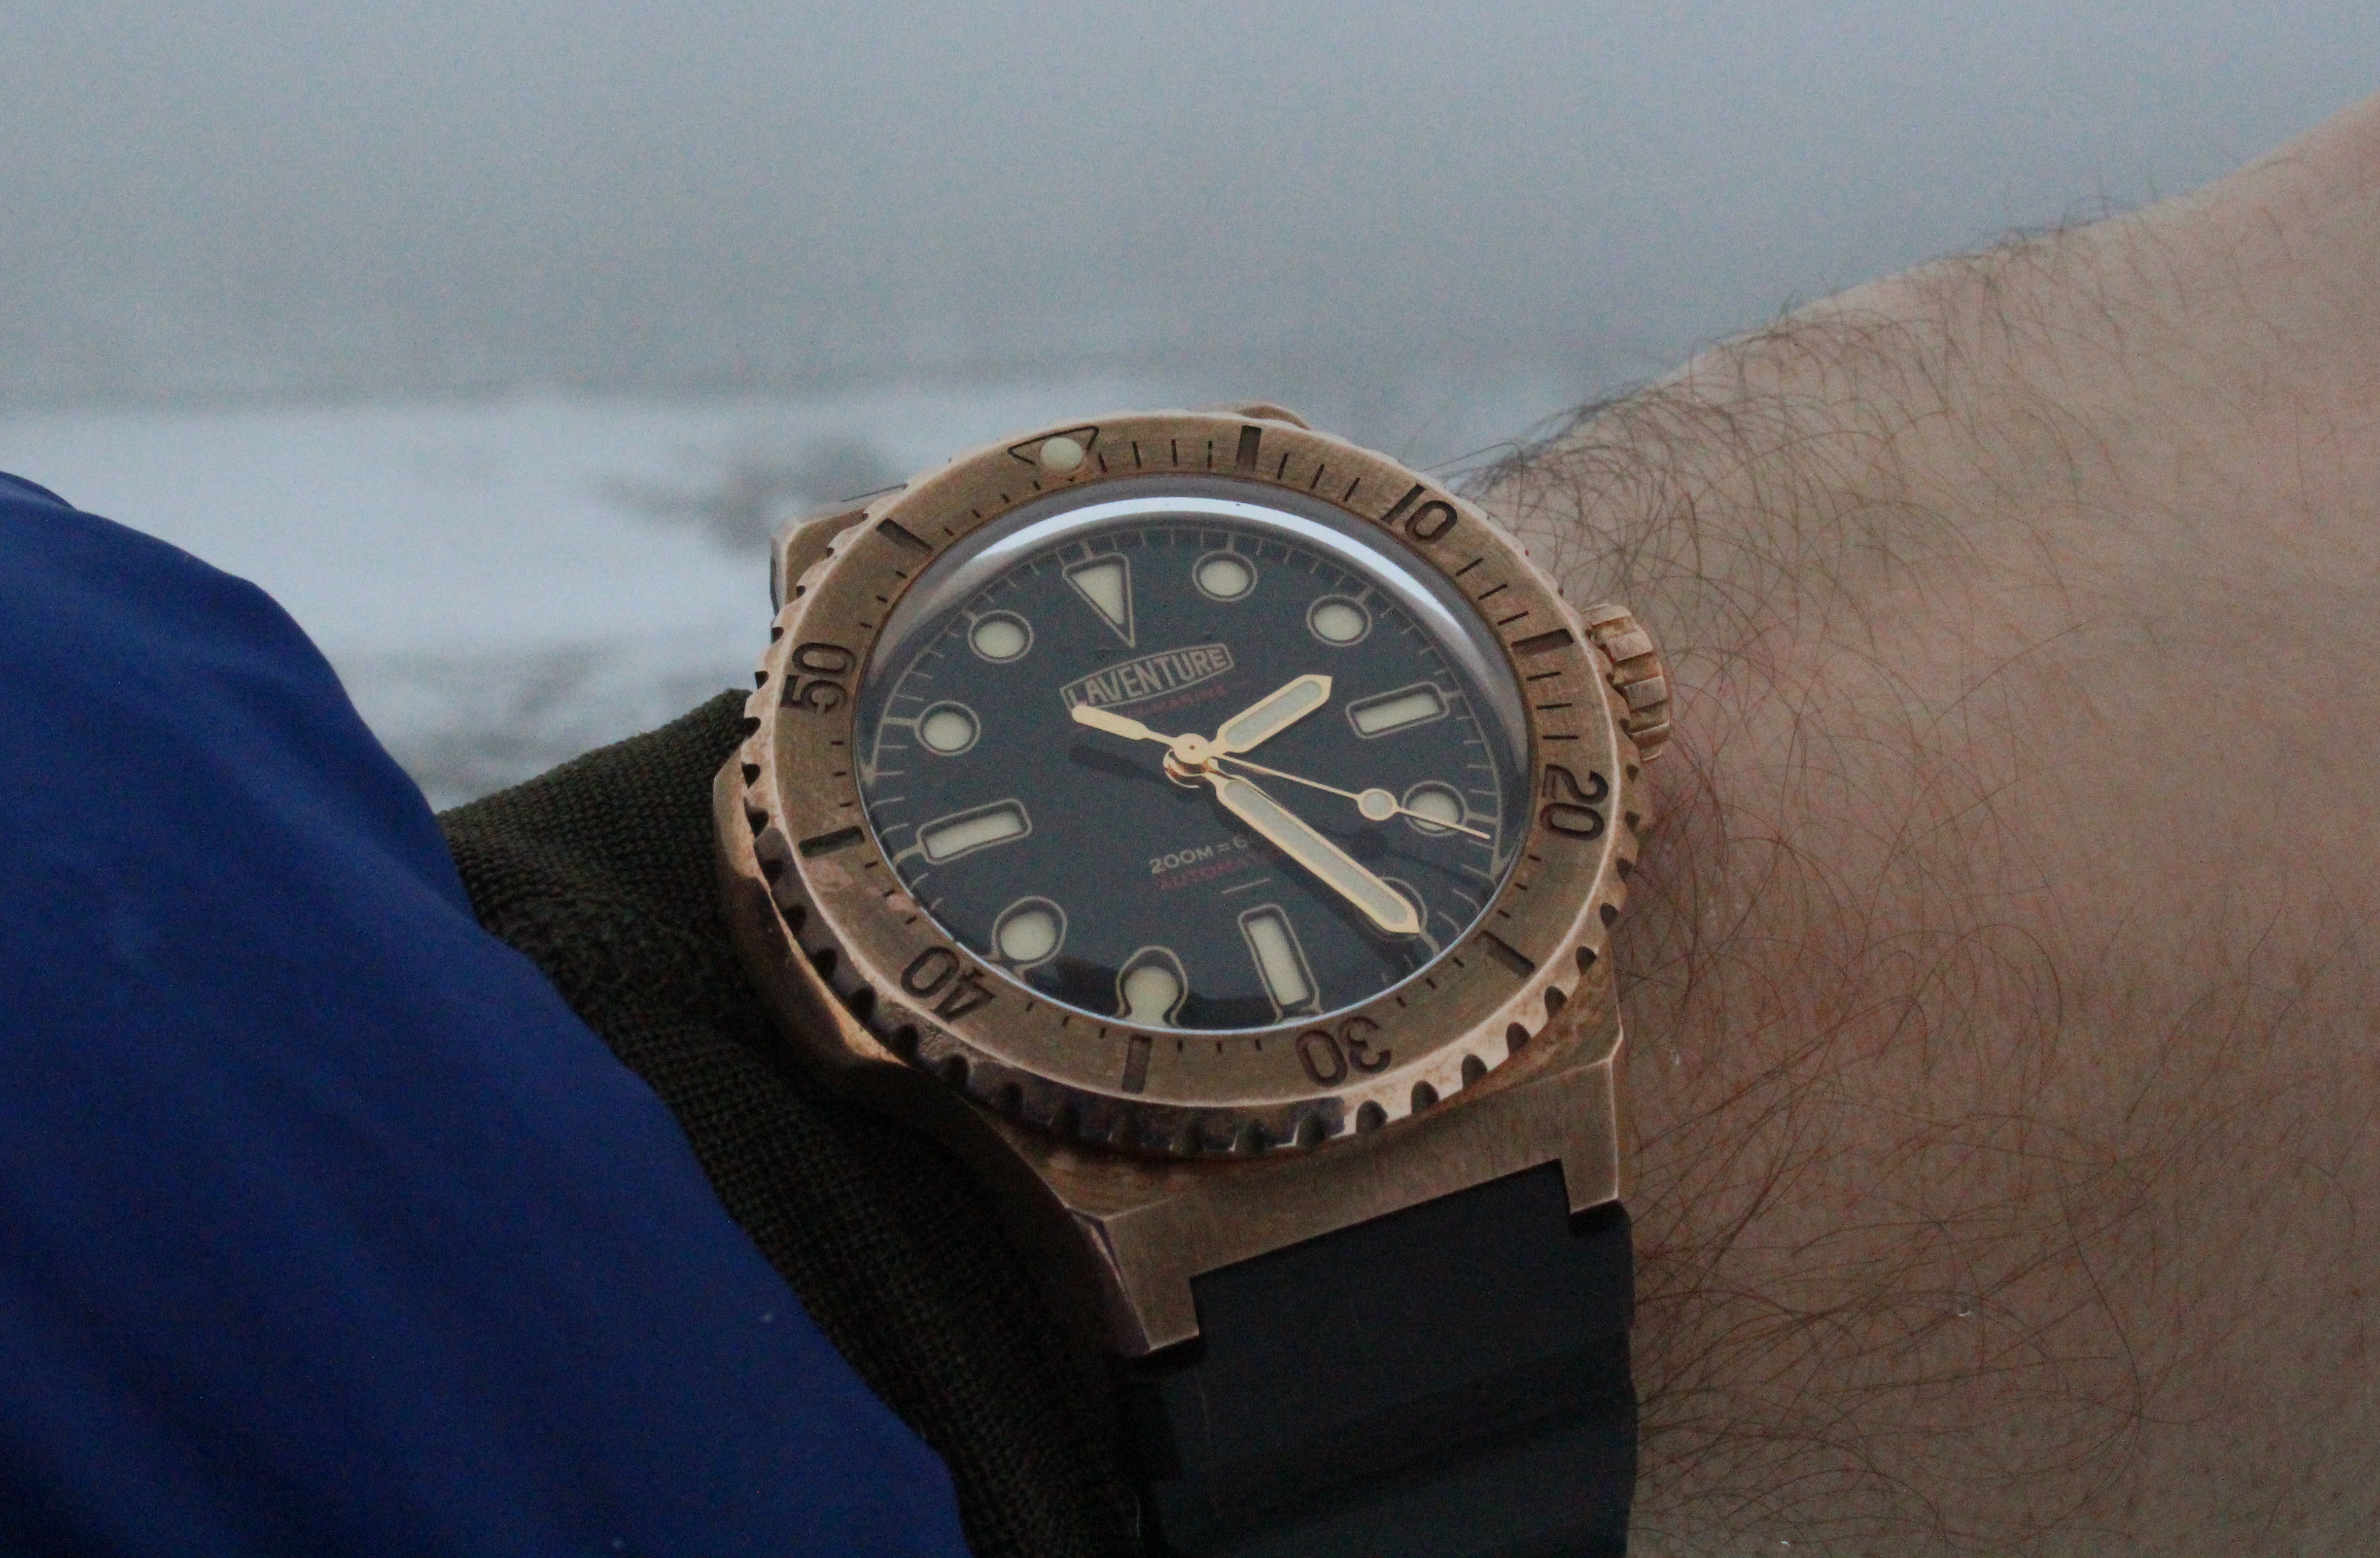 Laventure-Sous-Marine-Bronze-Watch-Wrist-Shot